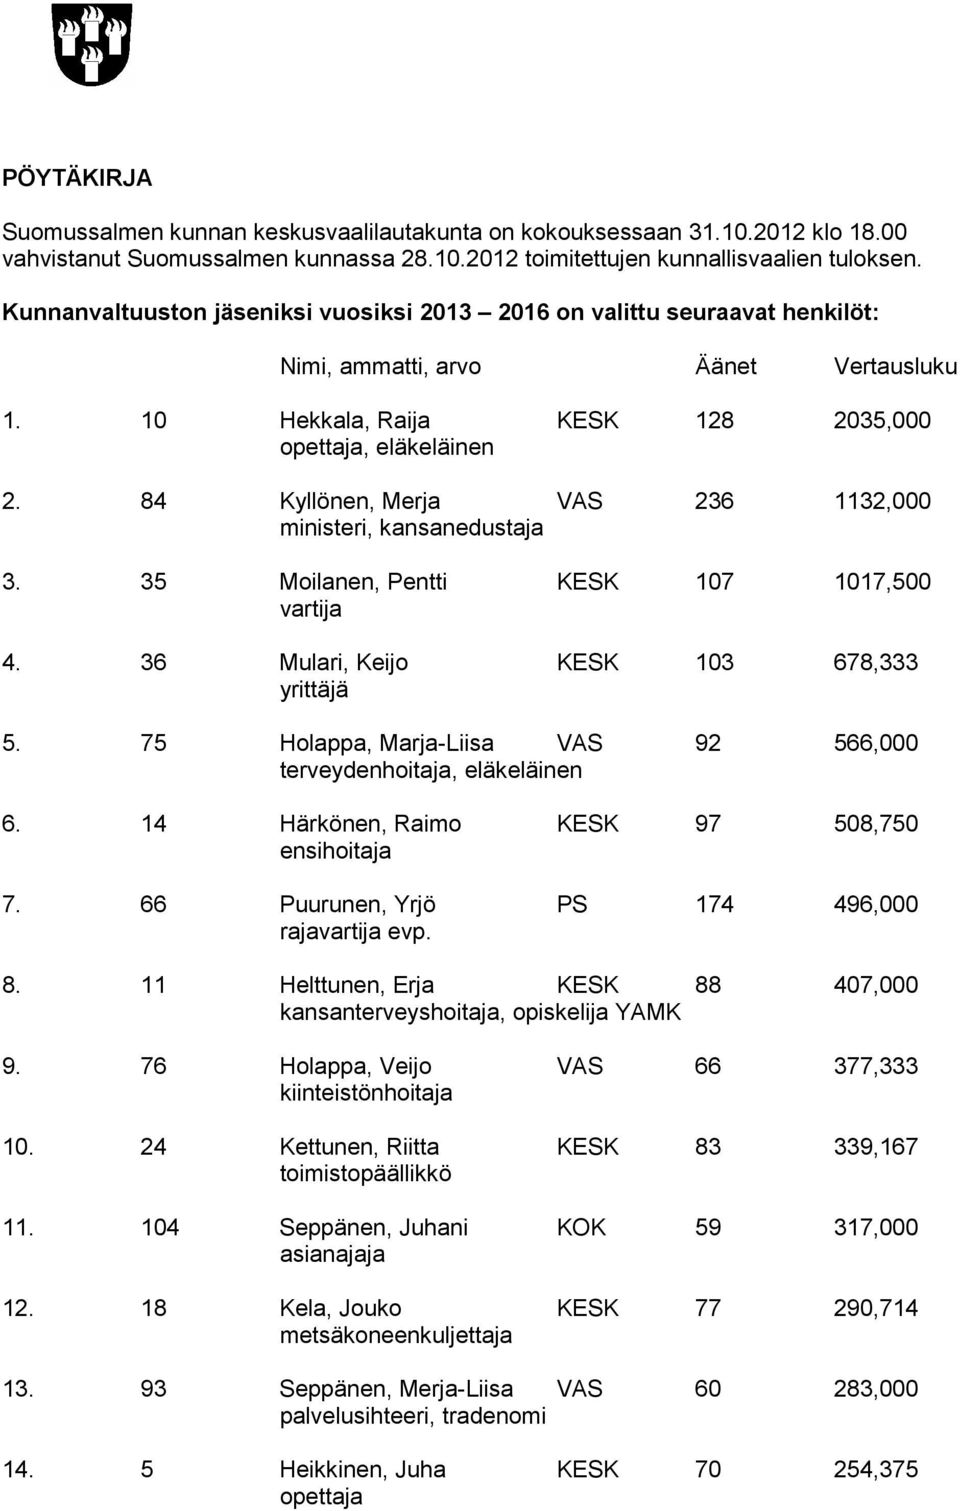 84 Kyllönen, Merja VAS 236 1132,000 ministeri, kansanedustaja 3. 35 Moilanen, Pentti KESK 107 1017,500 vartija 4. 36 Mulari, Keijo KESK 103 678,333 5.